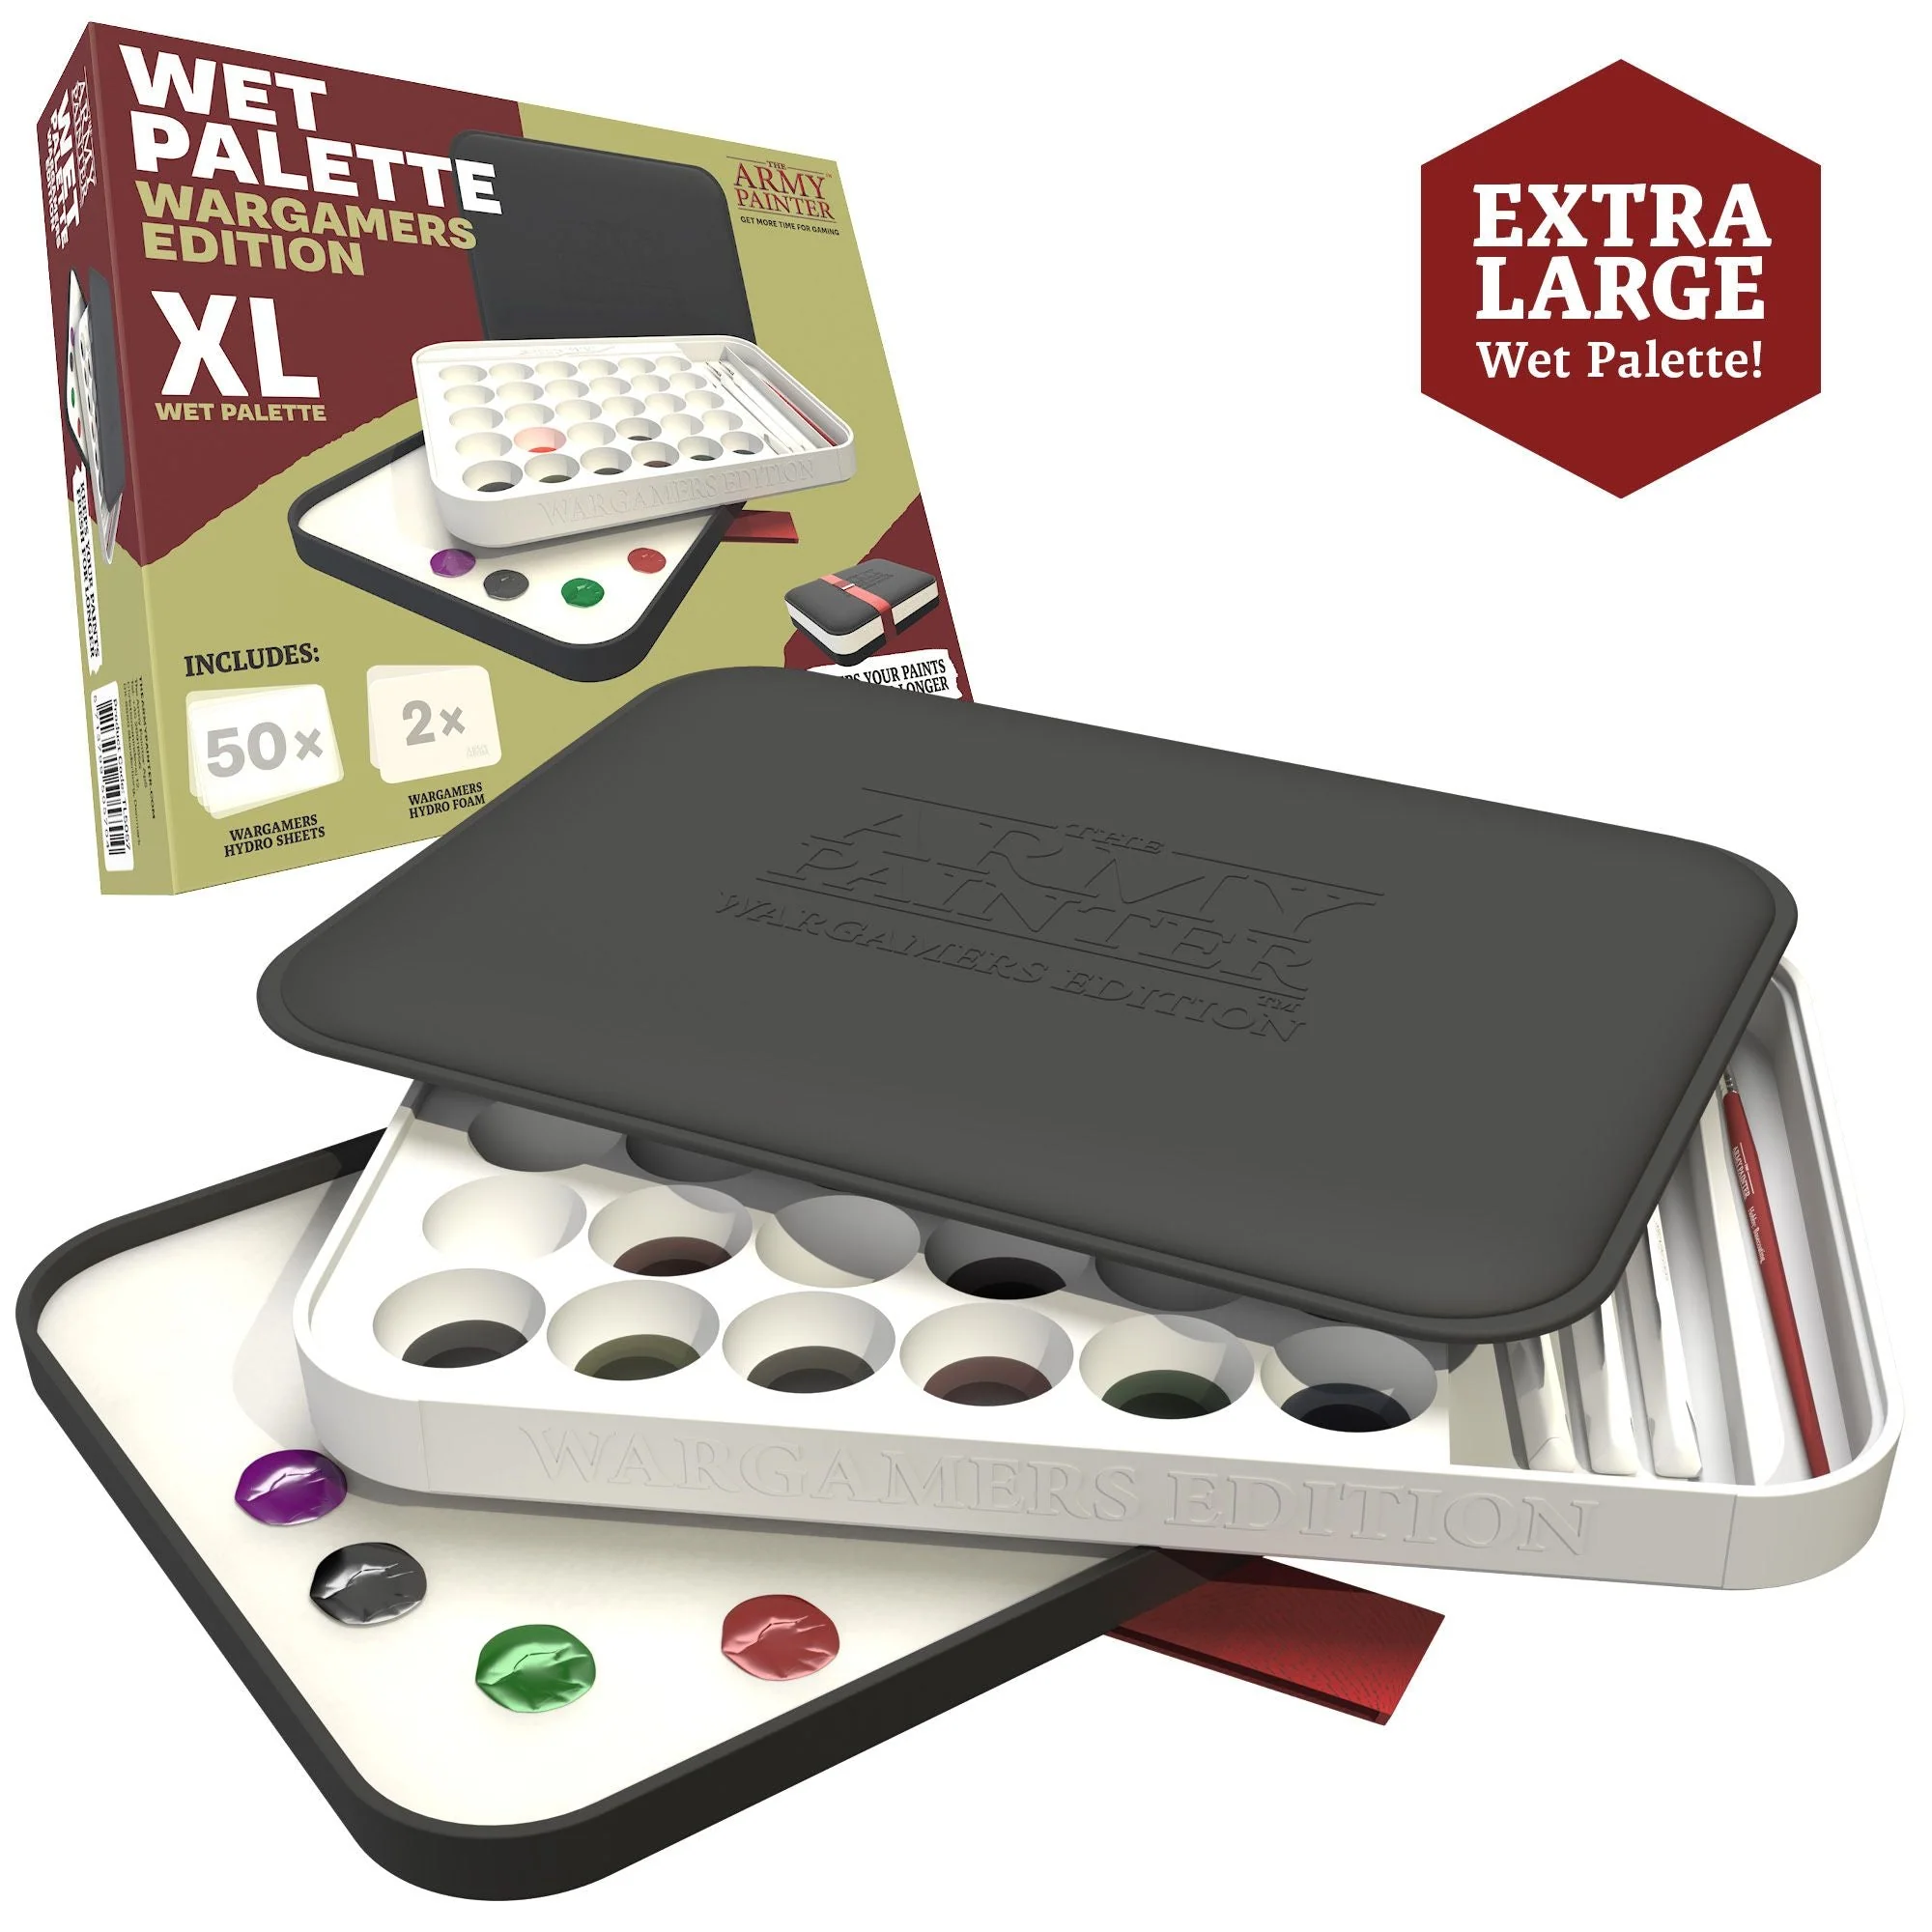 Army Painter Wet Palette - Gamers Edition-1712753600-Vgoix.webp